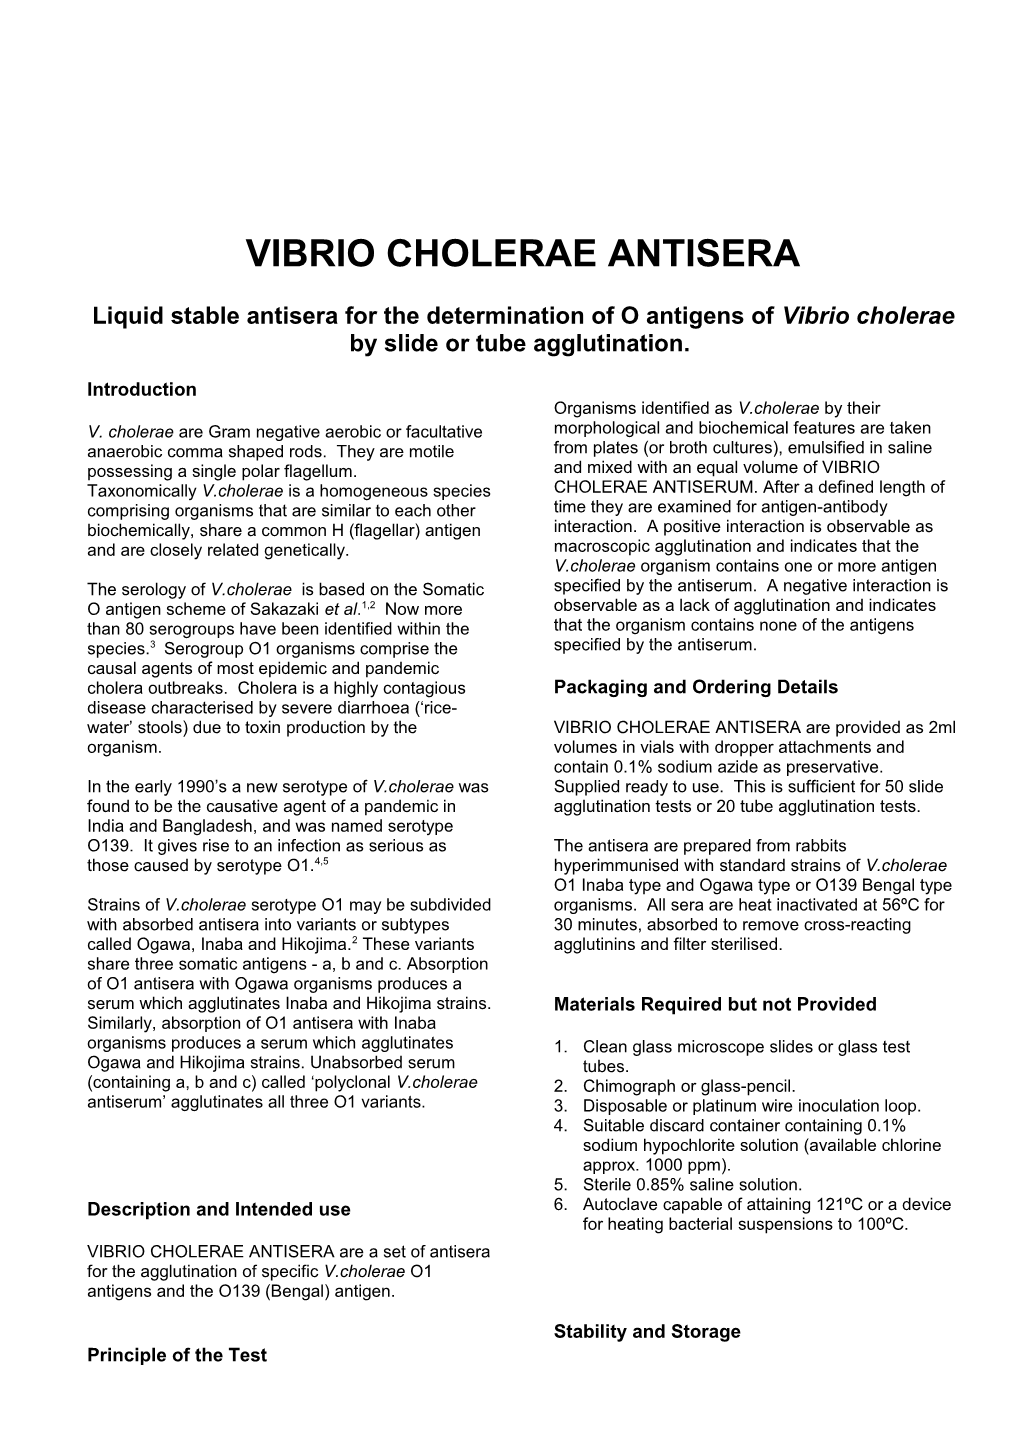 INSTRUCTIONS - Vibrio Cholera Antisera